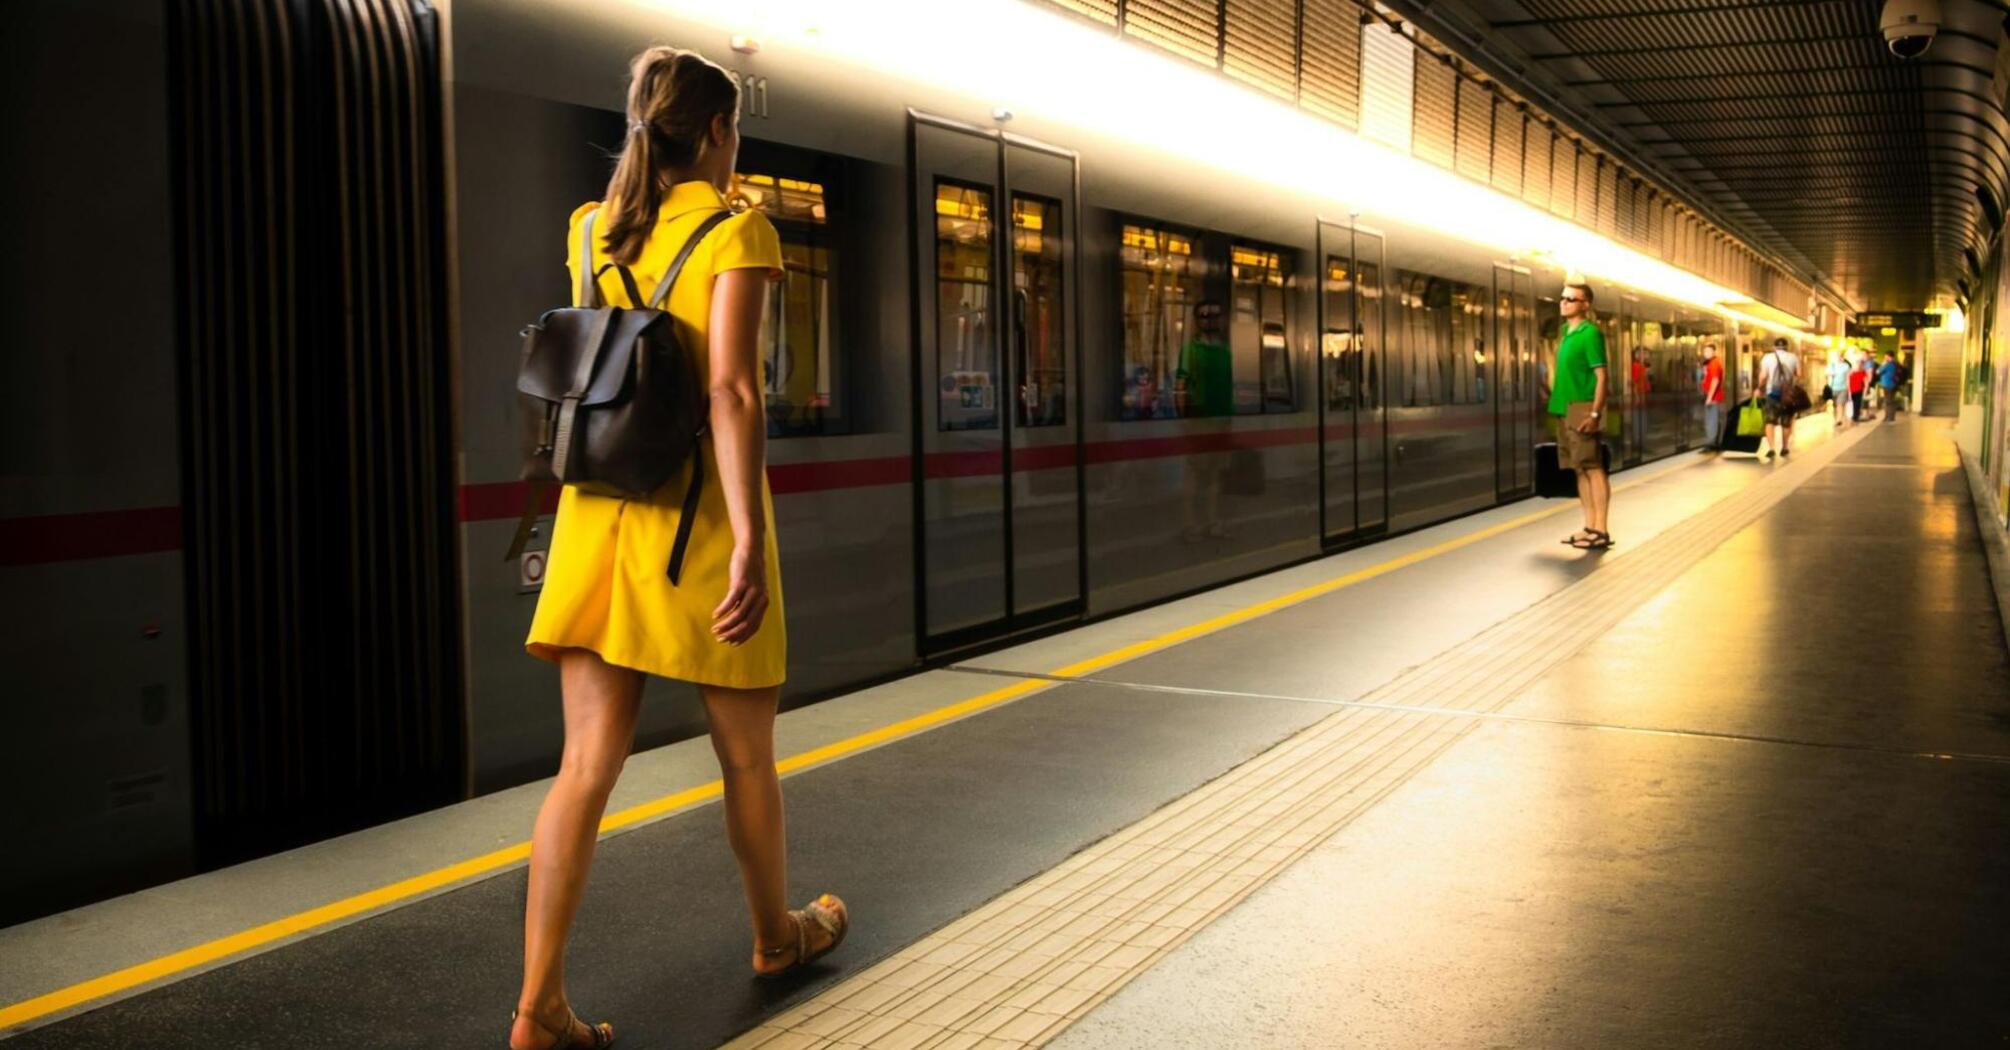 Woman in a yellow dress walking along a train platform